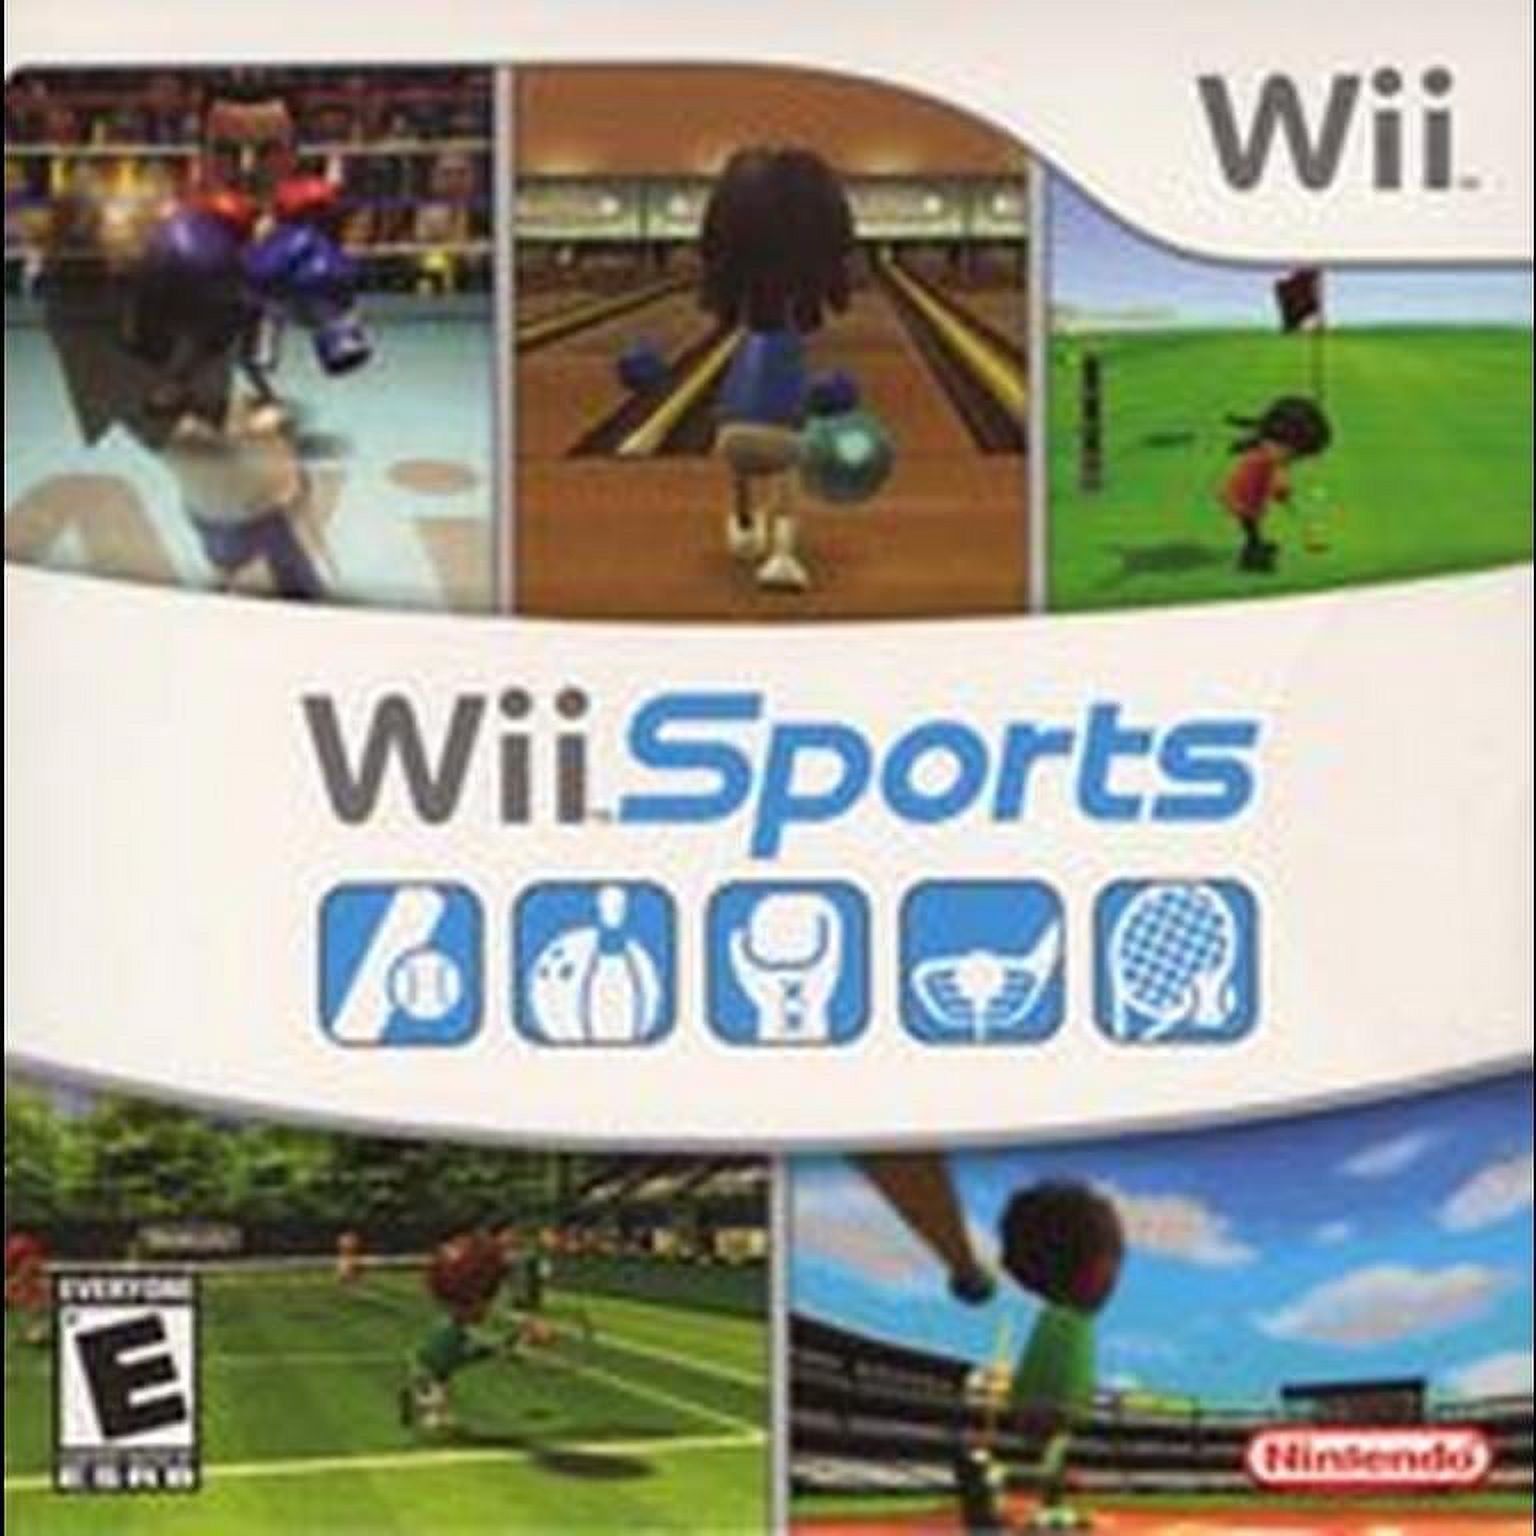 Wii Sports 2006 - Nintendo Wii Refurbished - image 1 of 2